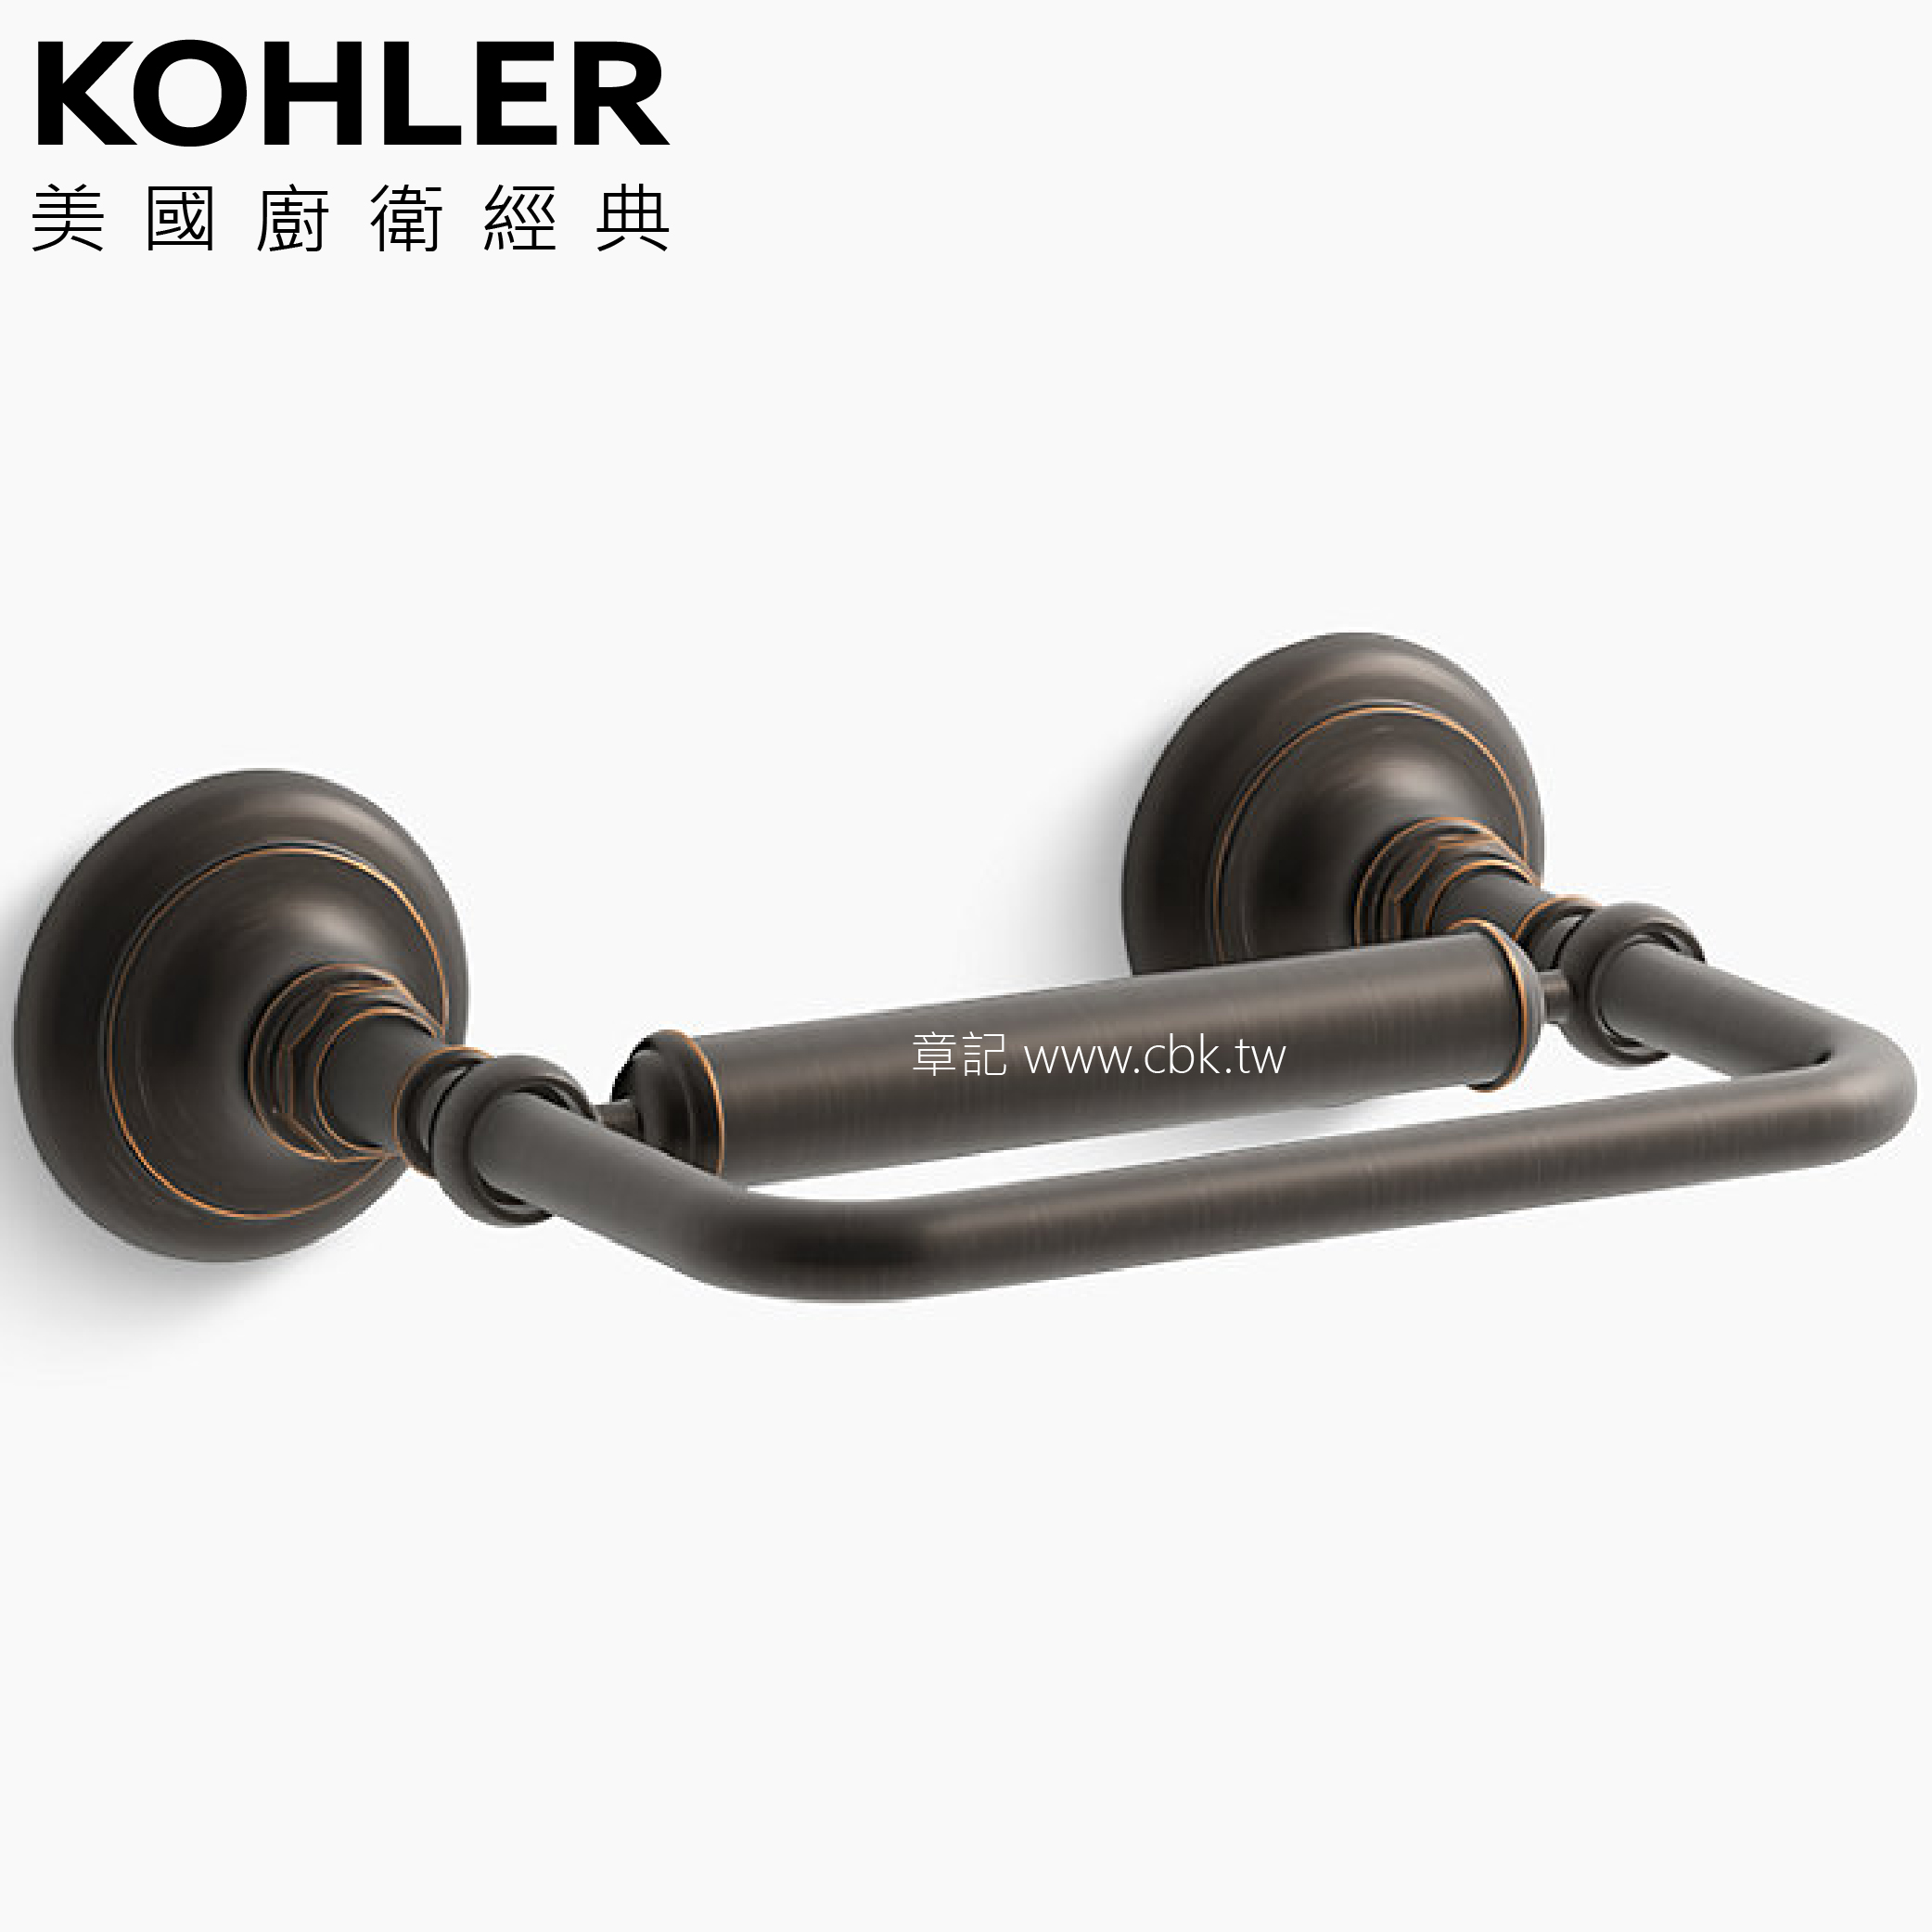 KOHLER Artifacts 廁紙架 K-72573T-2BZ  |浴室配件|衛生紙架